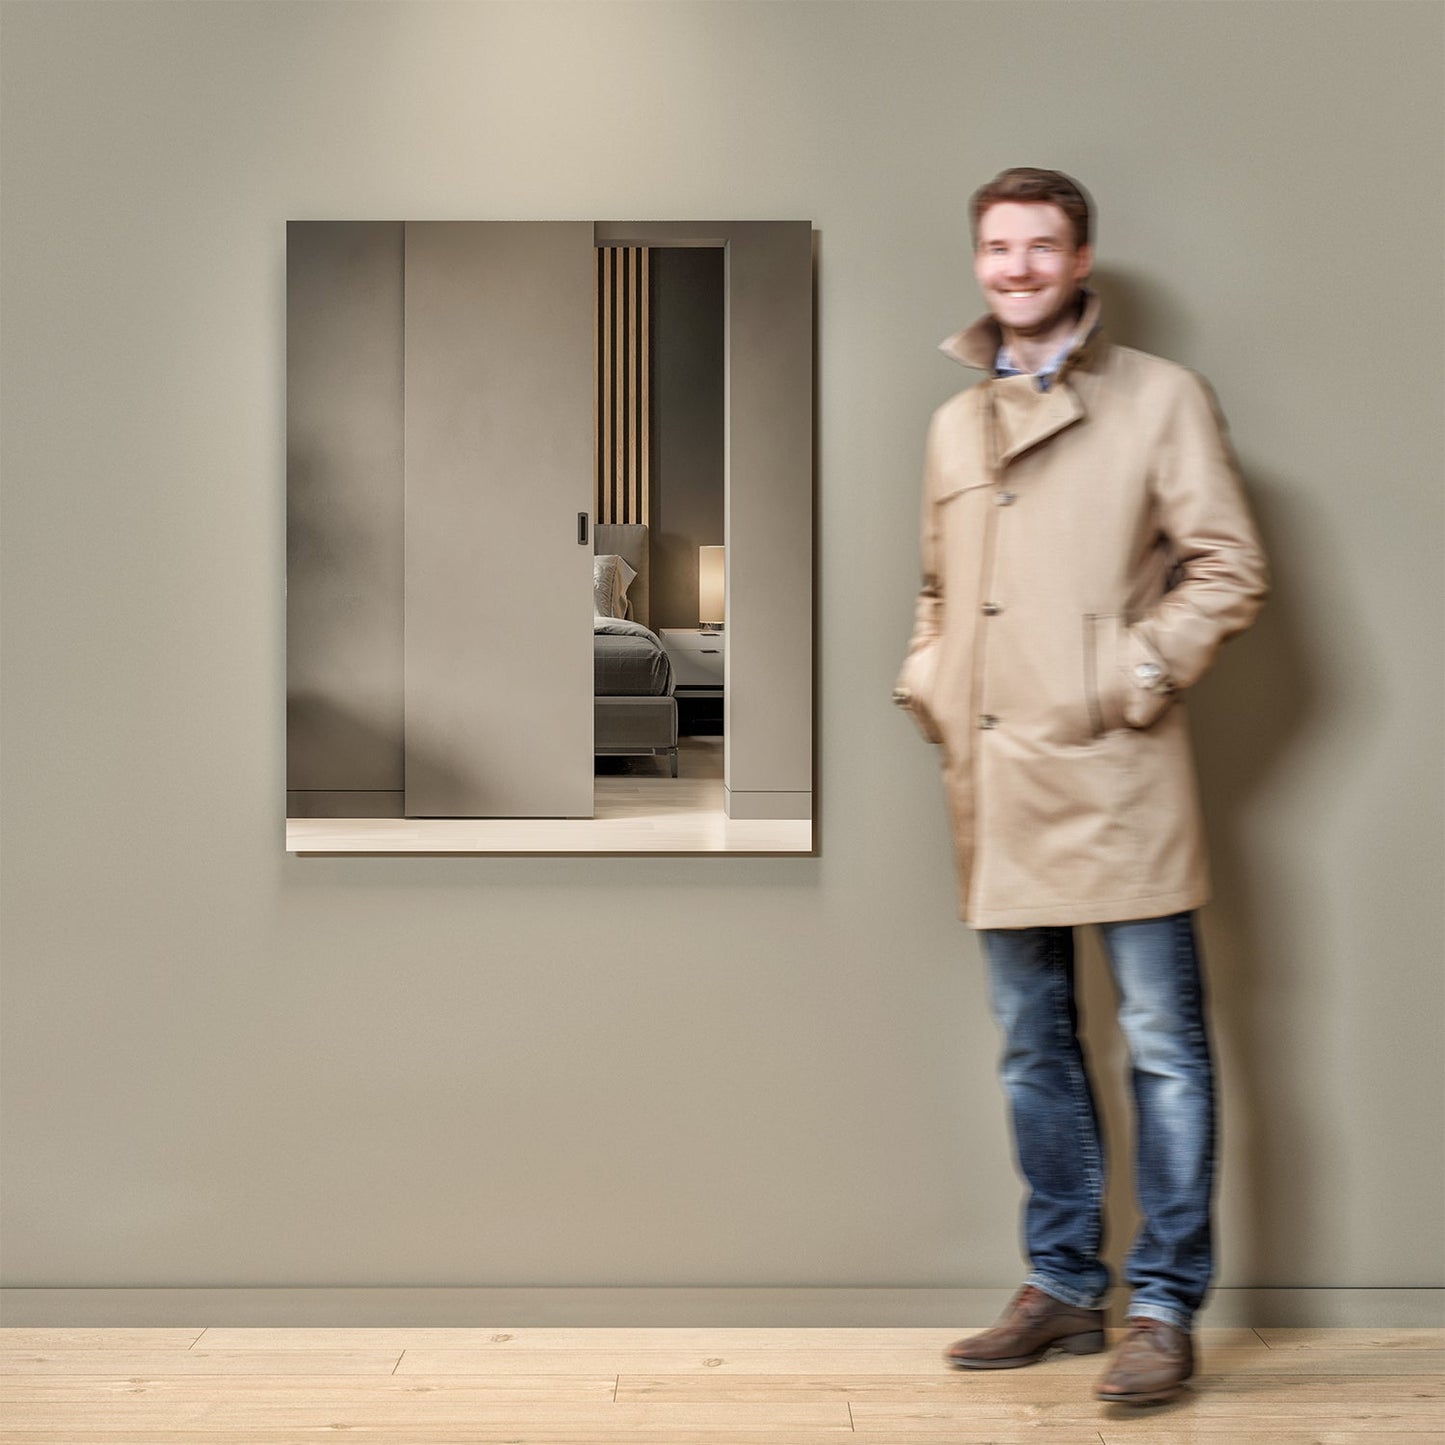 Eviva Sleek 30" Frameless Bathroom Wall Mirror